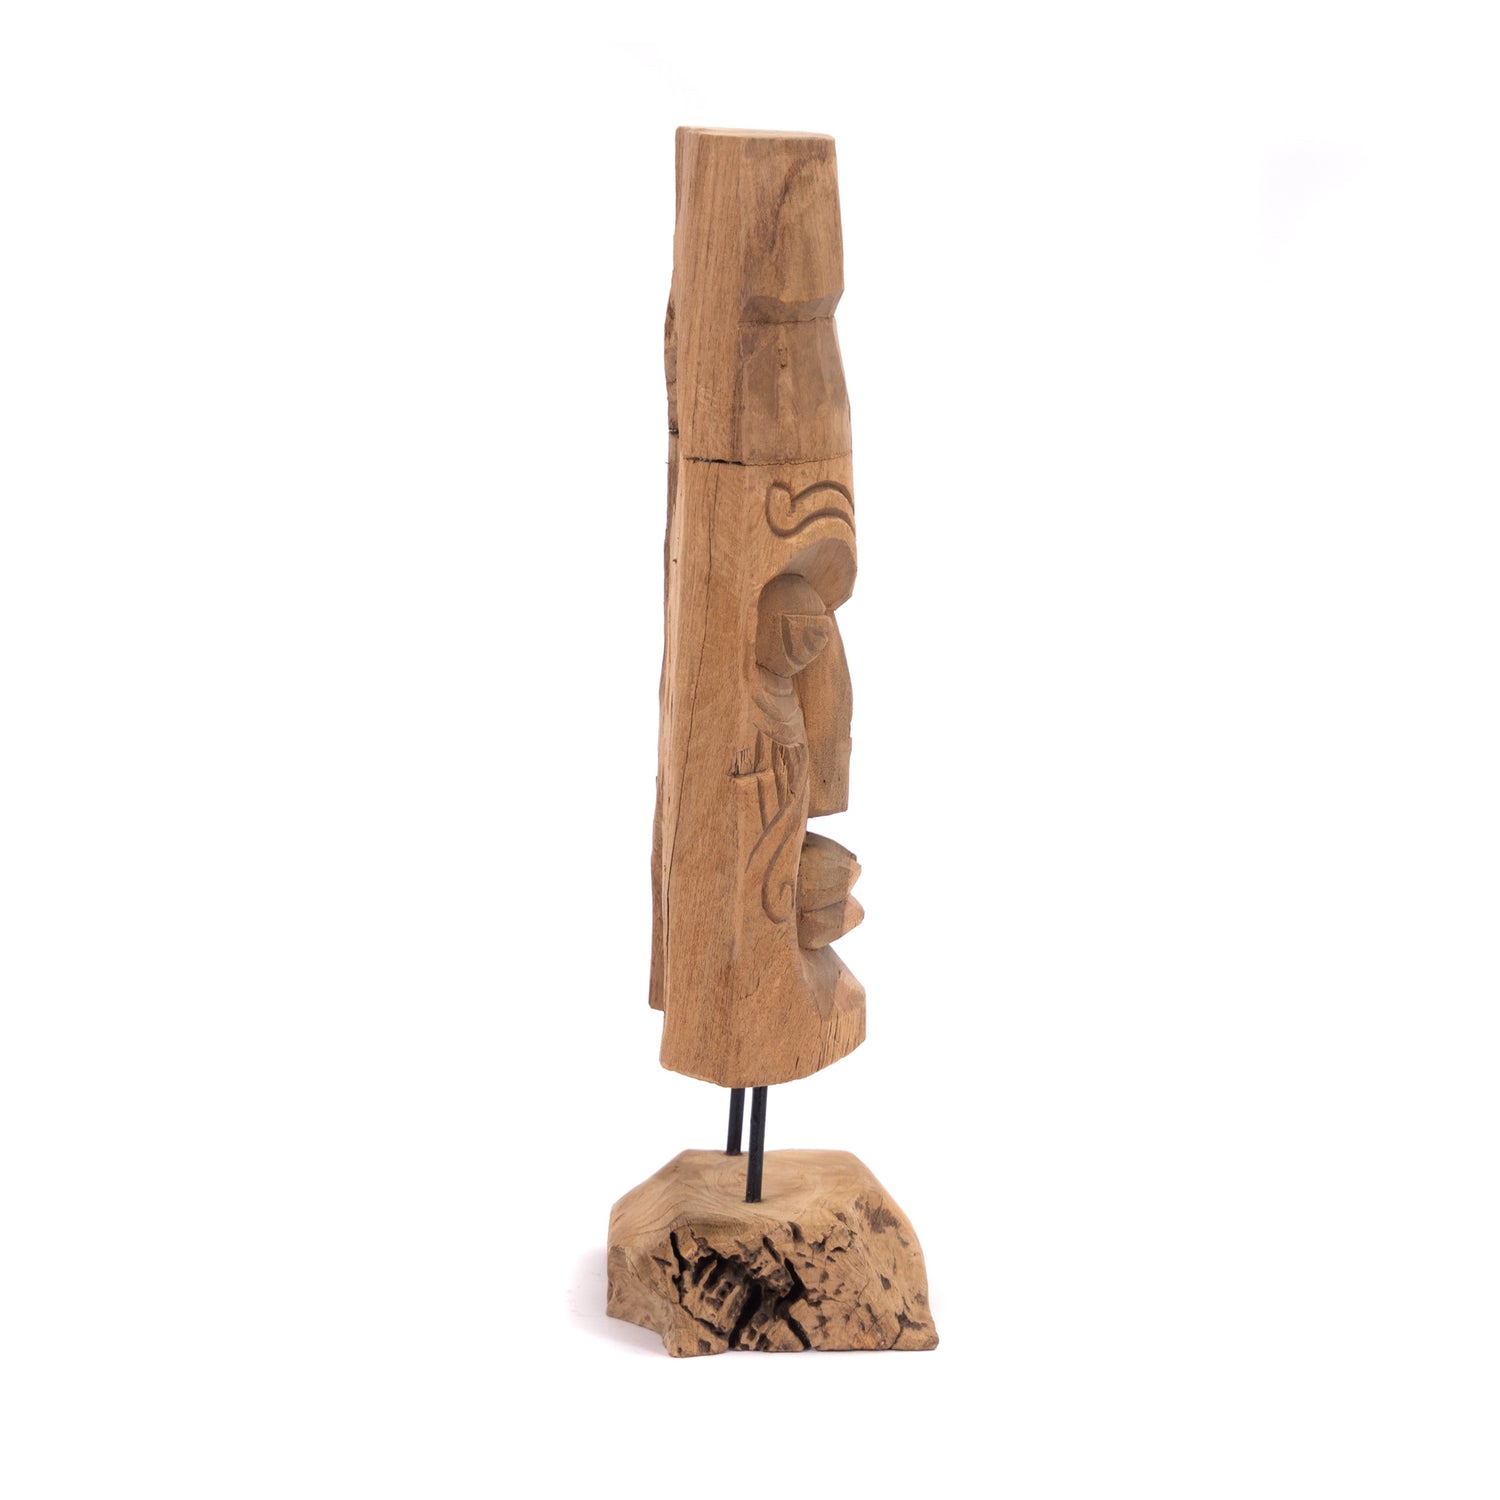 HOLZ SKULPTUR "TIKI" | Massivholz, 40 cm | Hawaii Tiki Deko Objekt